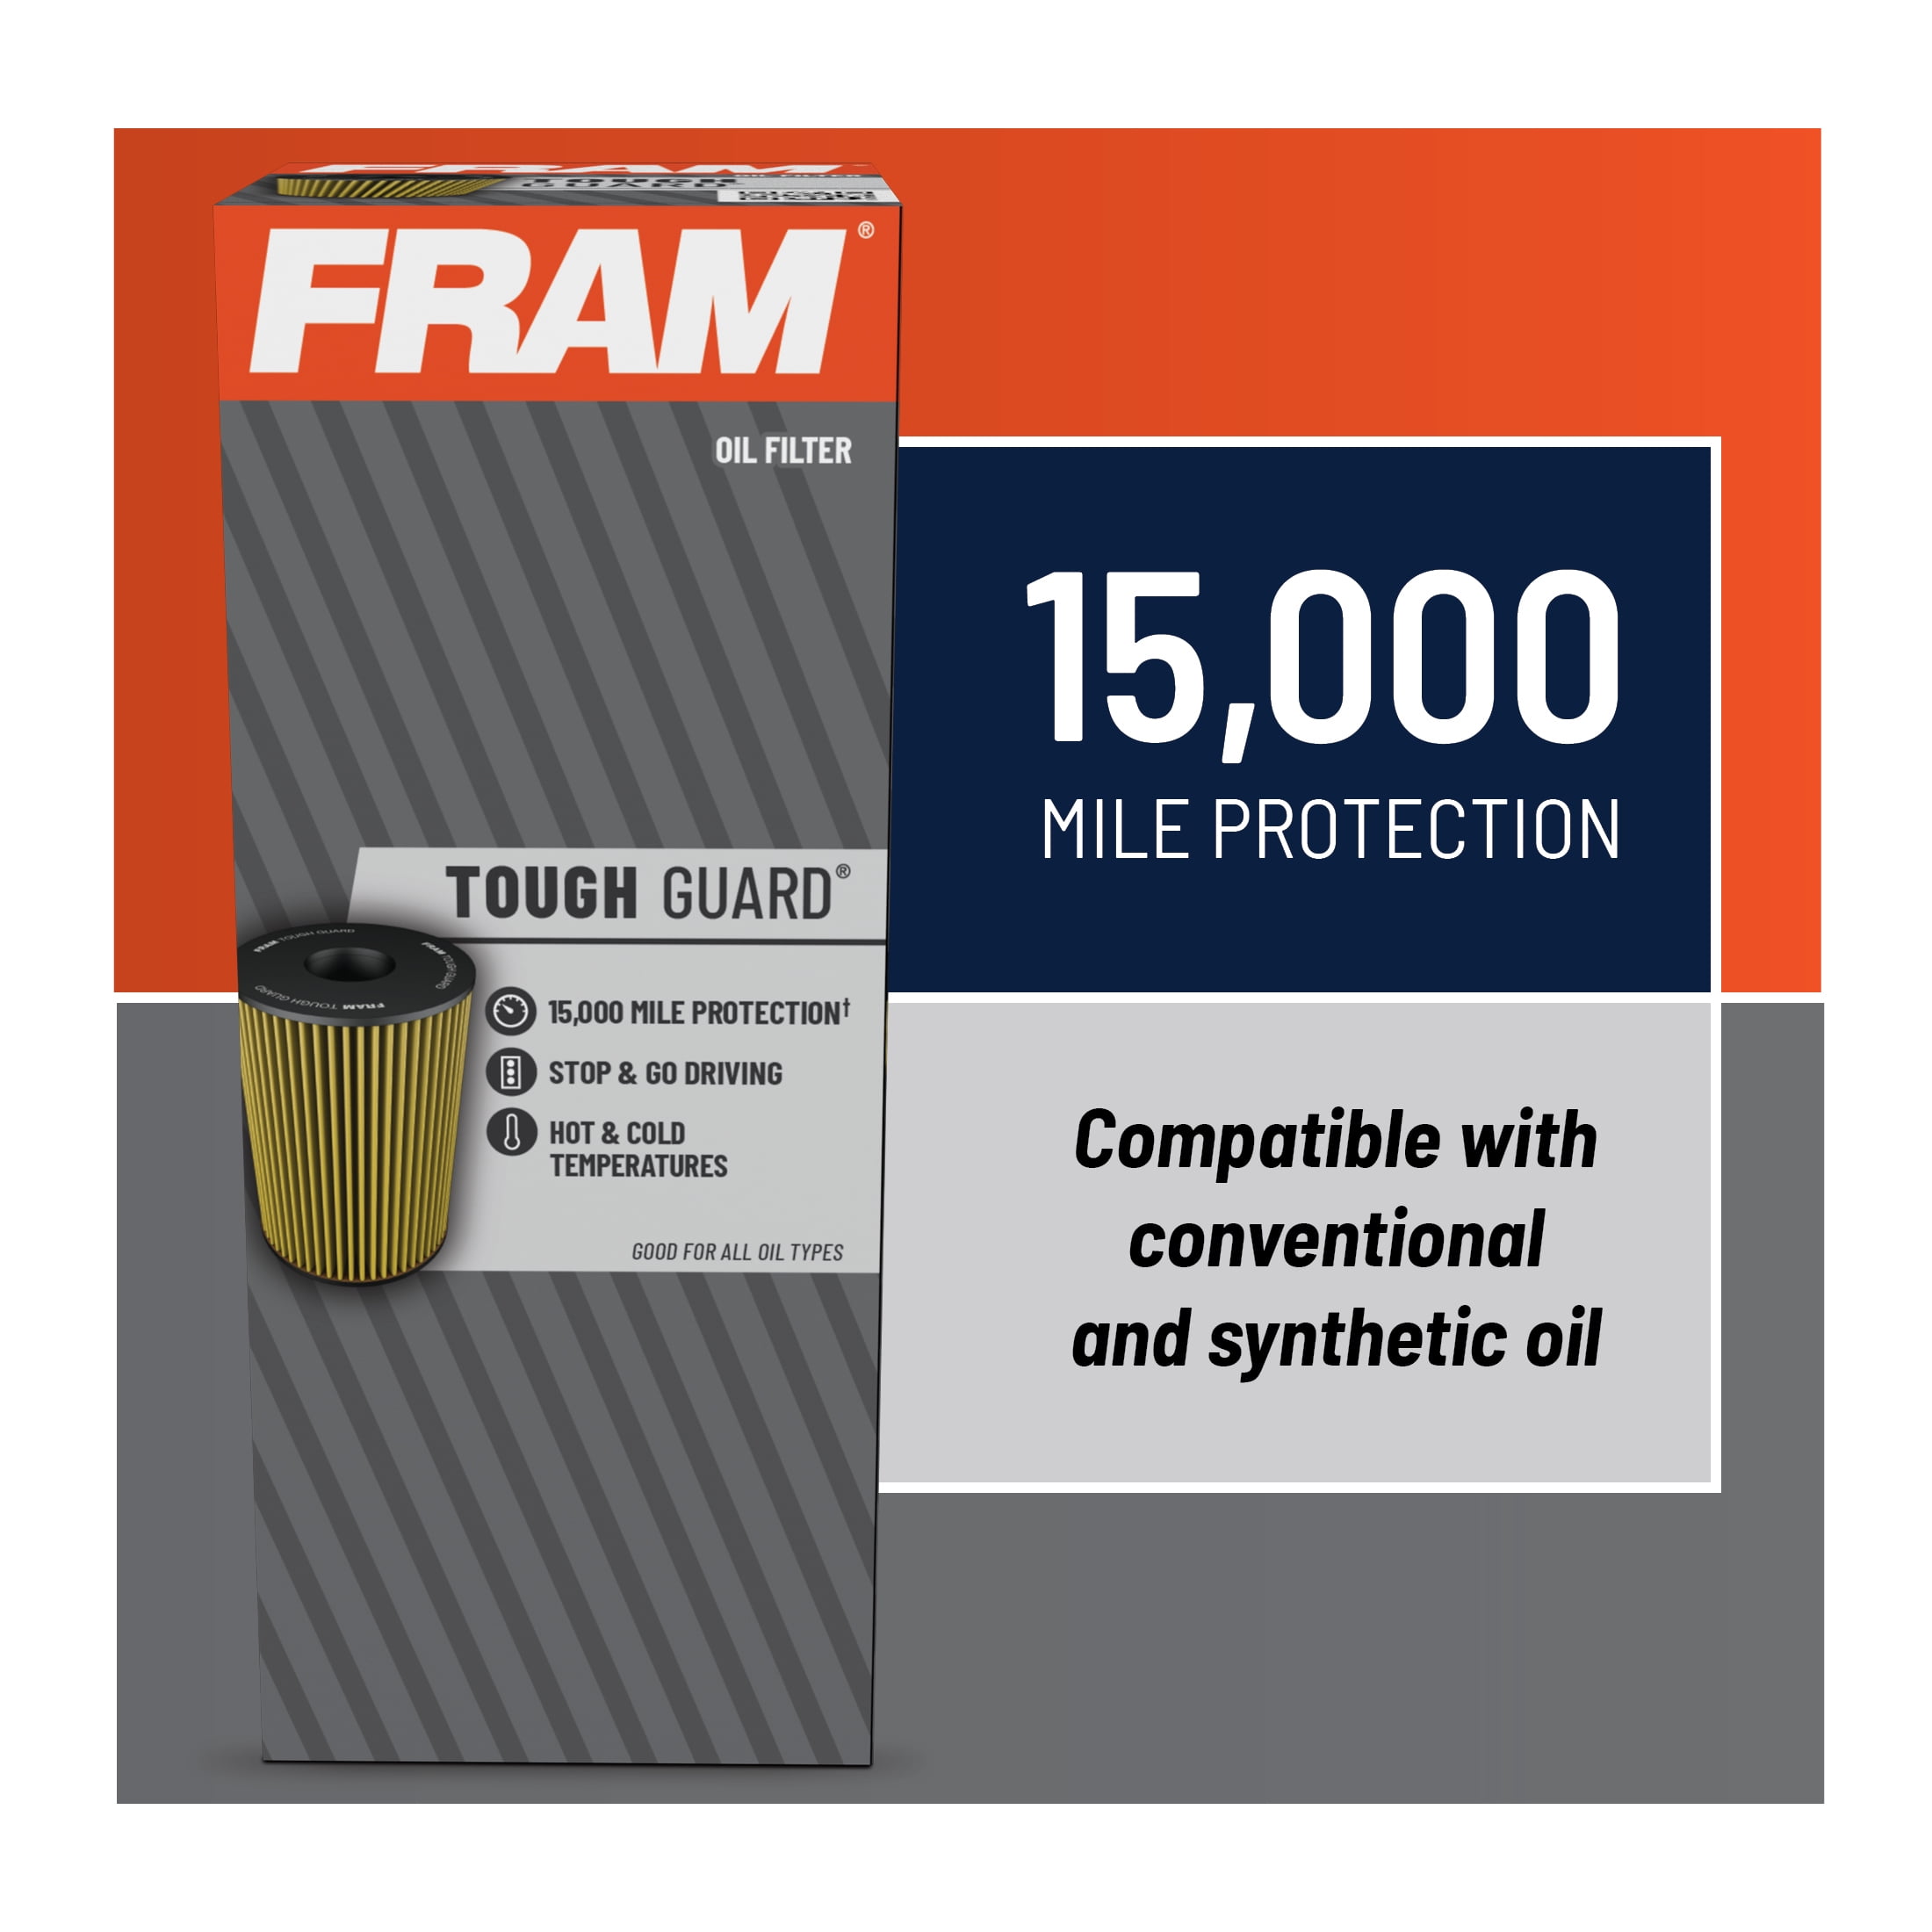 FRAM Tough Guard 15,000 Mile Oil Filter, TG8481, for Select Mercedes Vehicles